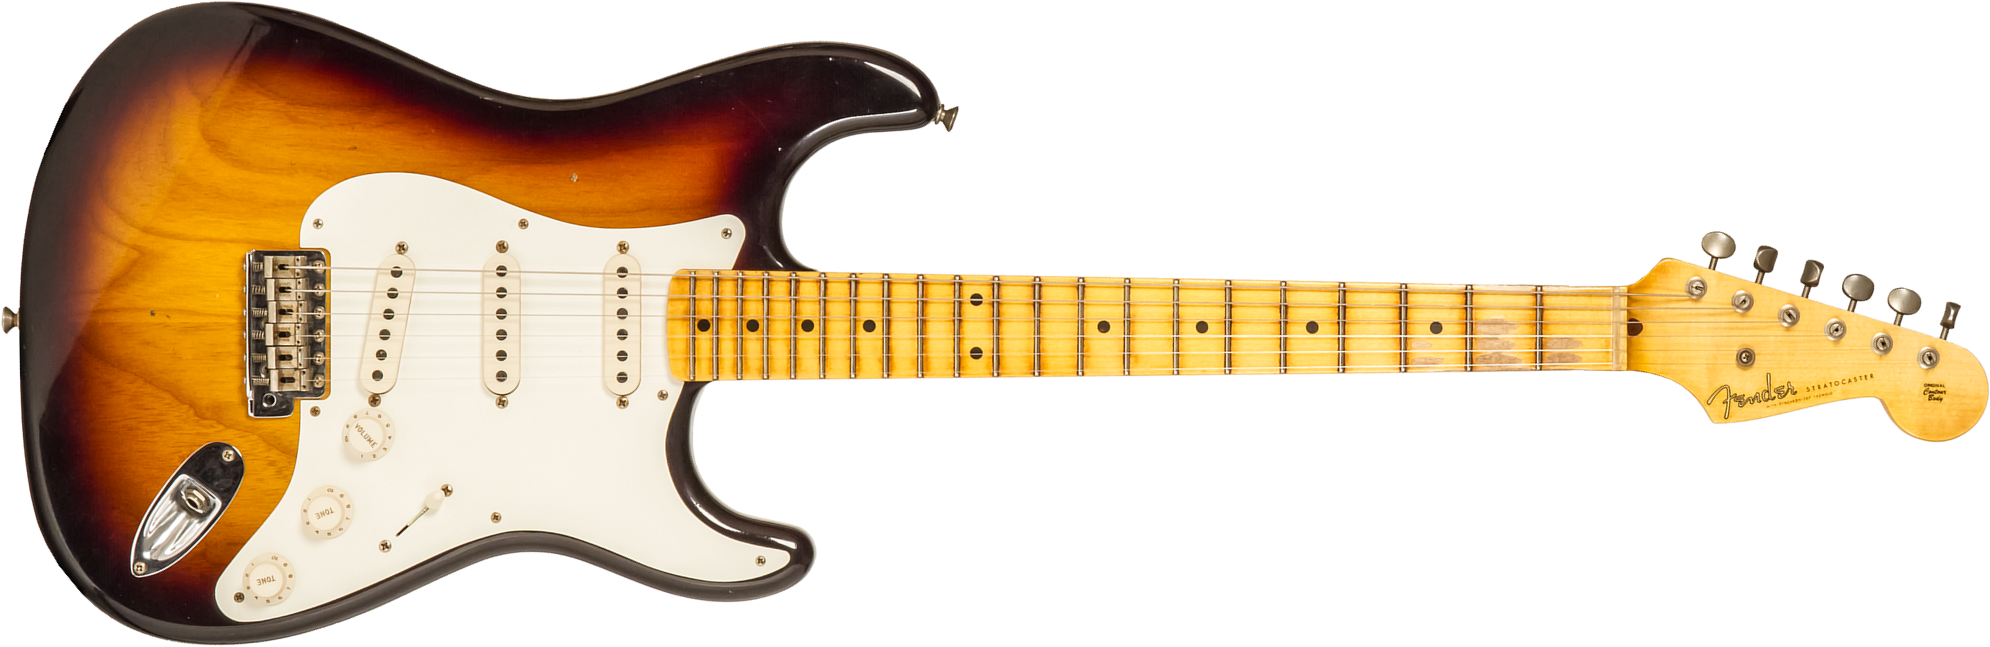 Fender Custom Shop Strat 1955 3s Trem Mn #r130058 - Journeyman Relic 2-color Sunburst - E-Gitarre in Str-Form - Main picture